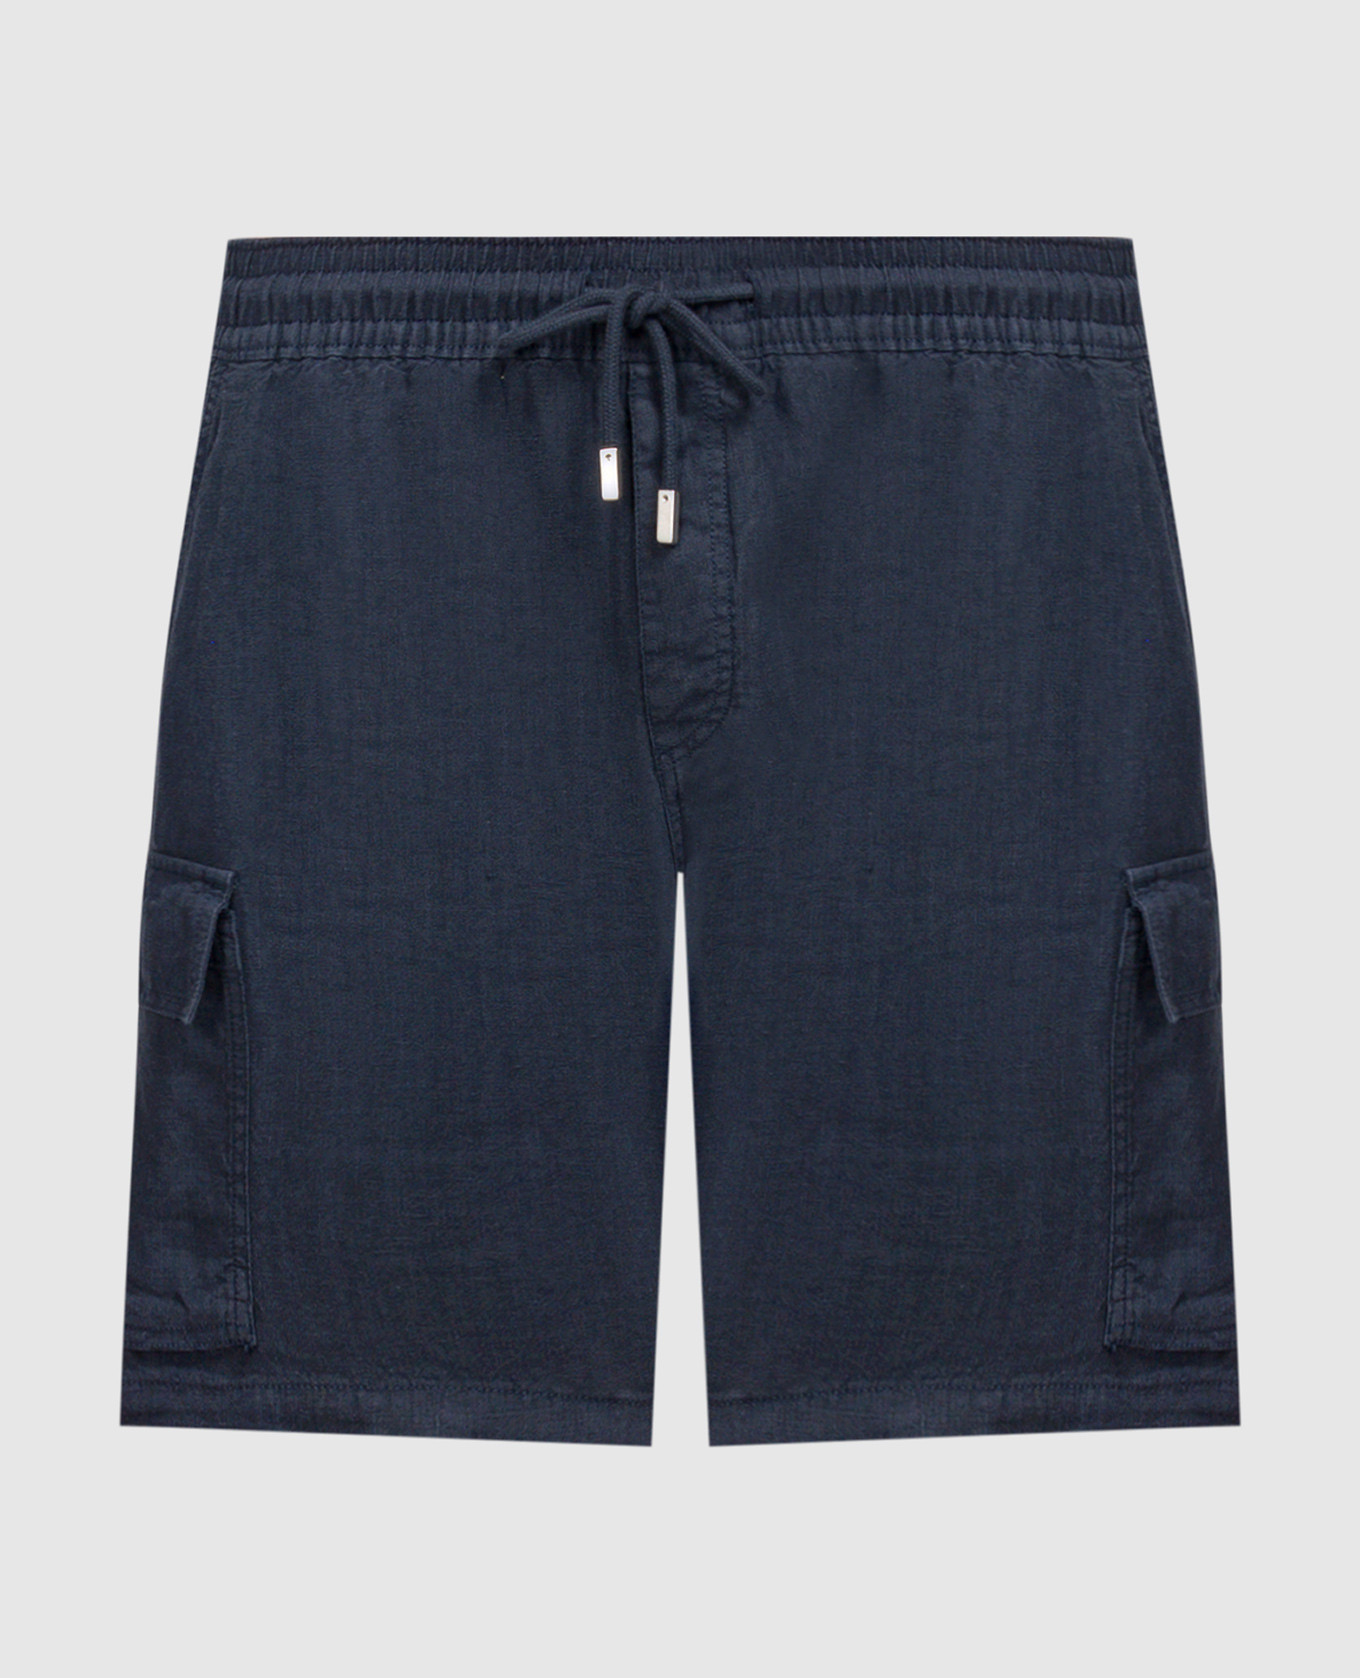 Blue linen cargo shorts